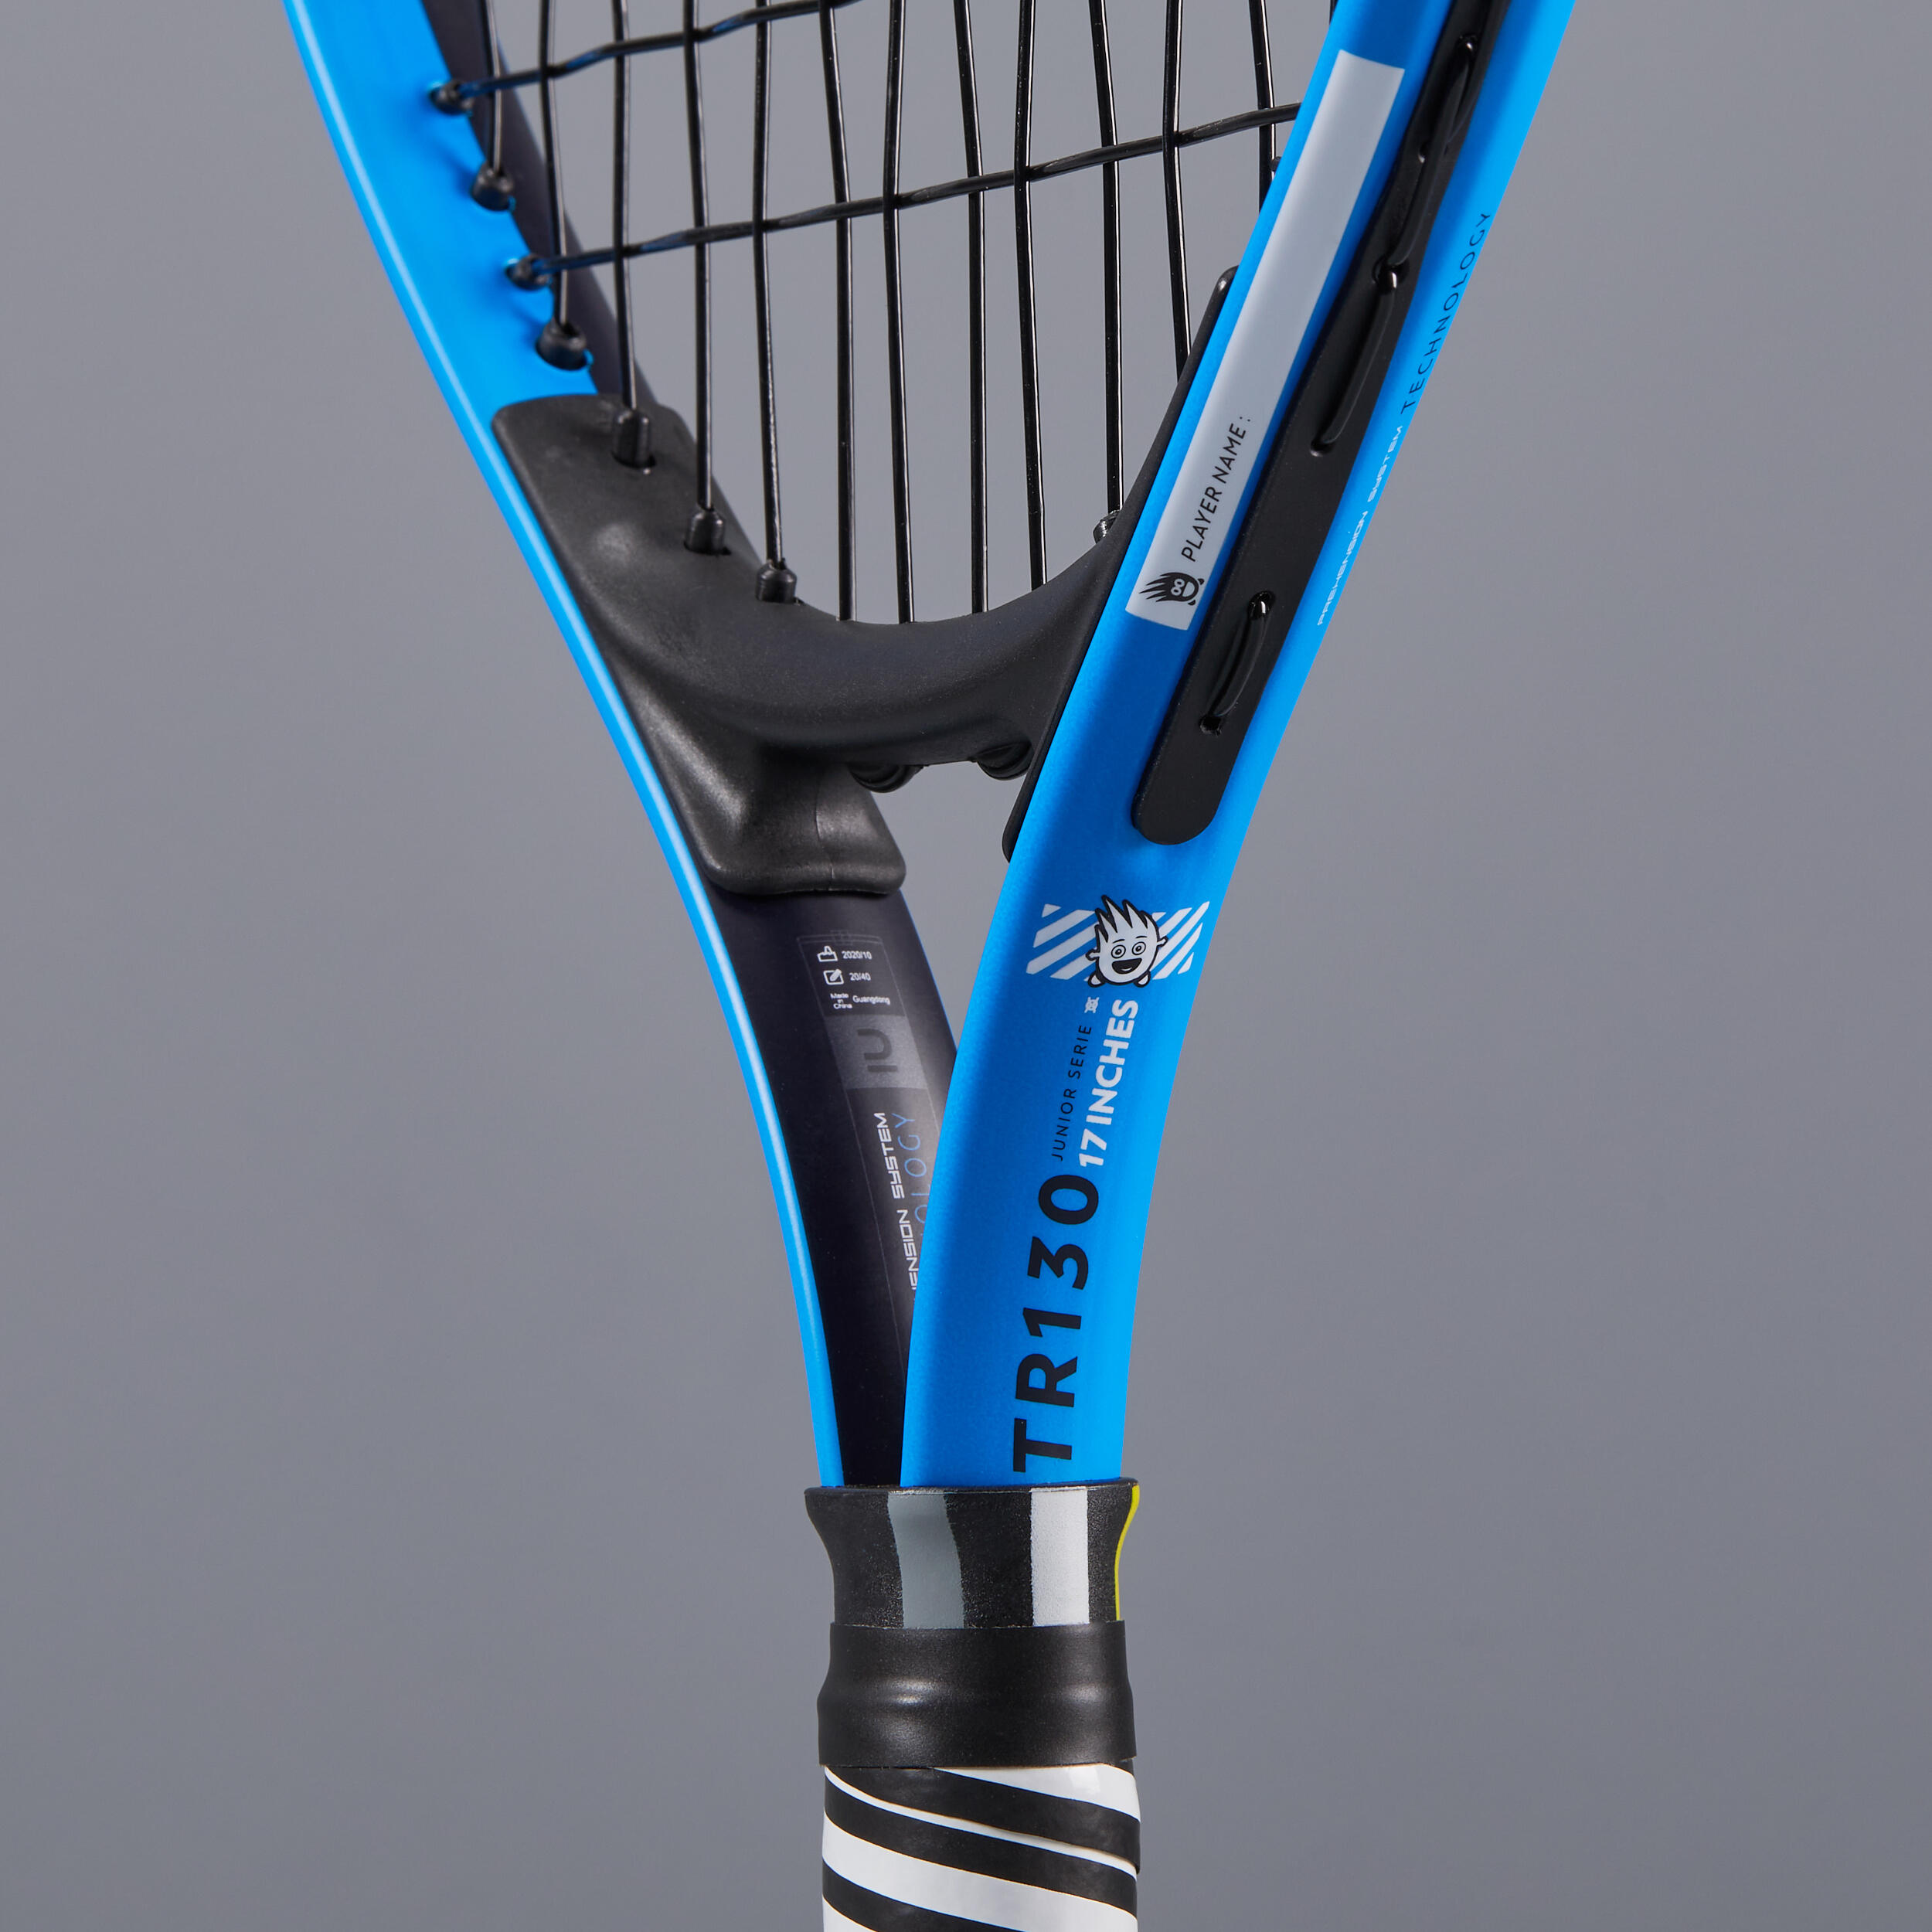 Kids' Tennis Racket 176 g - TR 130 Blue/Black - ARTENGO